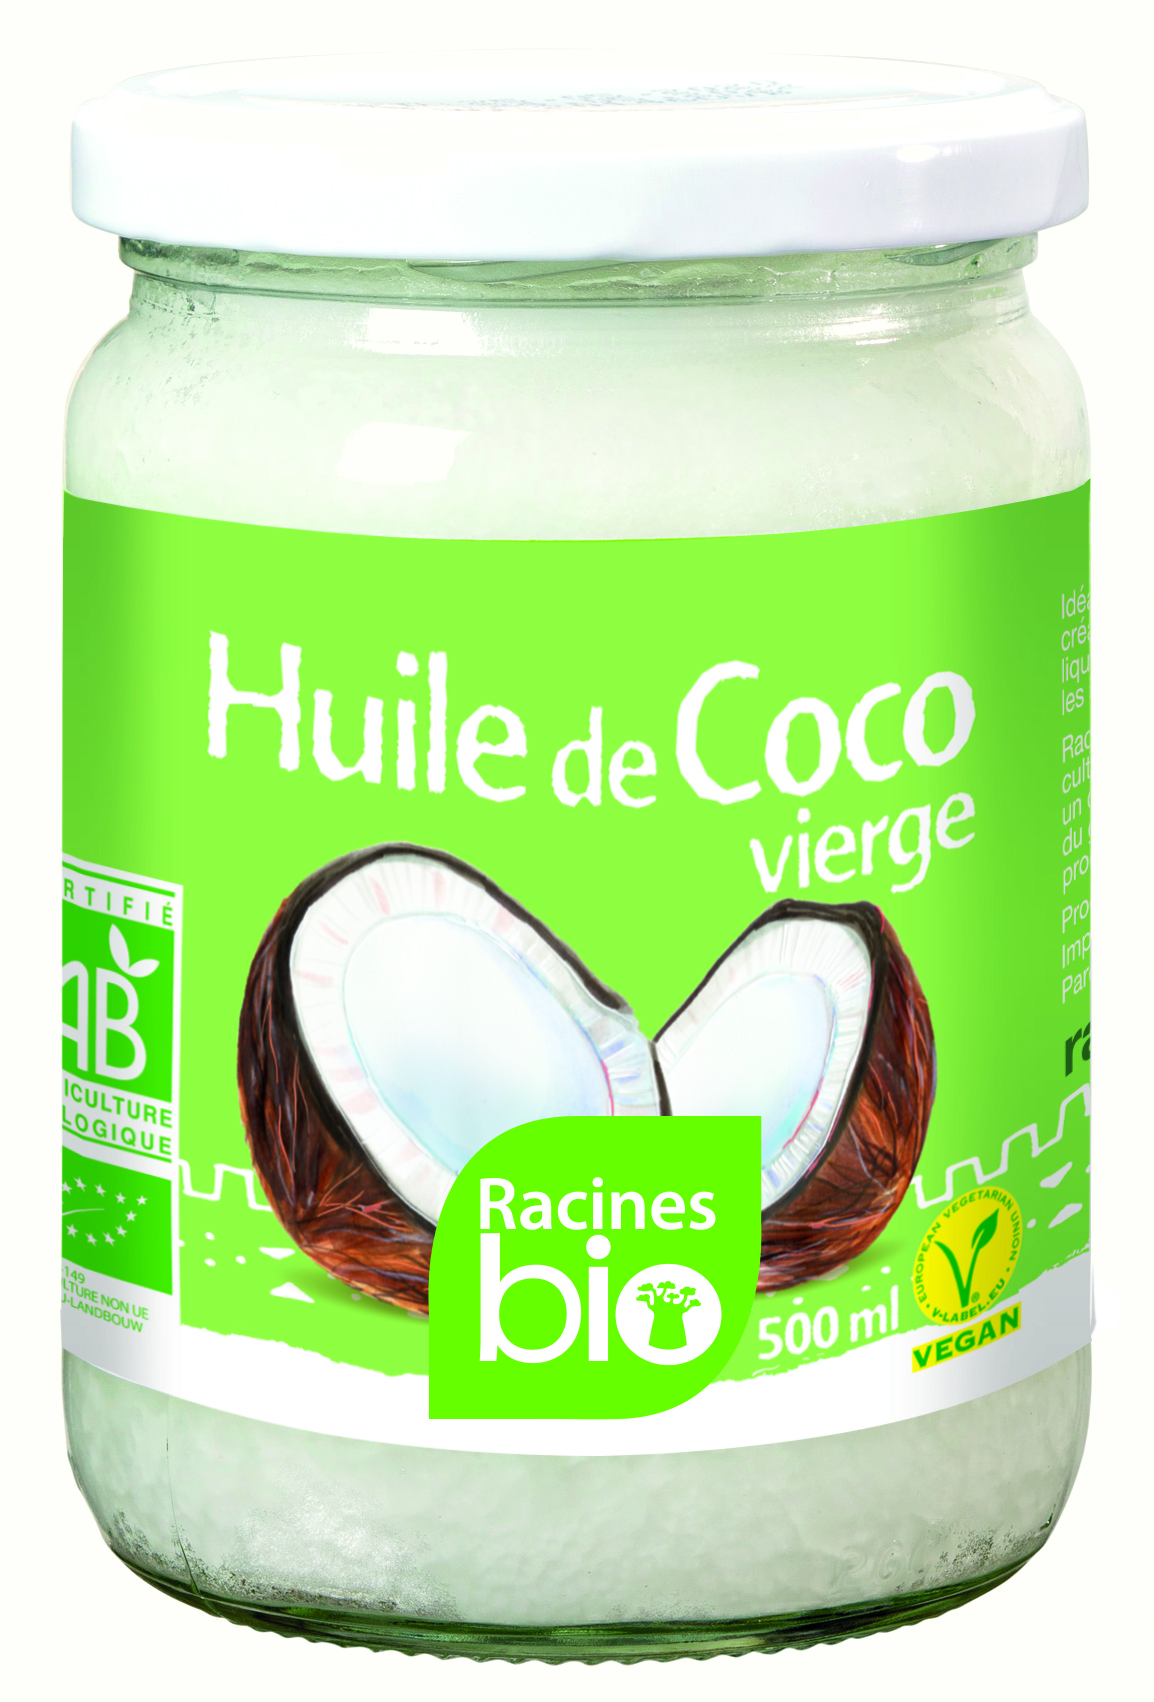 Óleo de coco virgem (12 x 500 ml) - Racines Bio